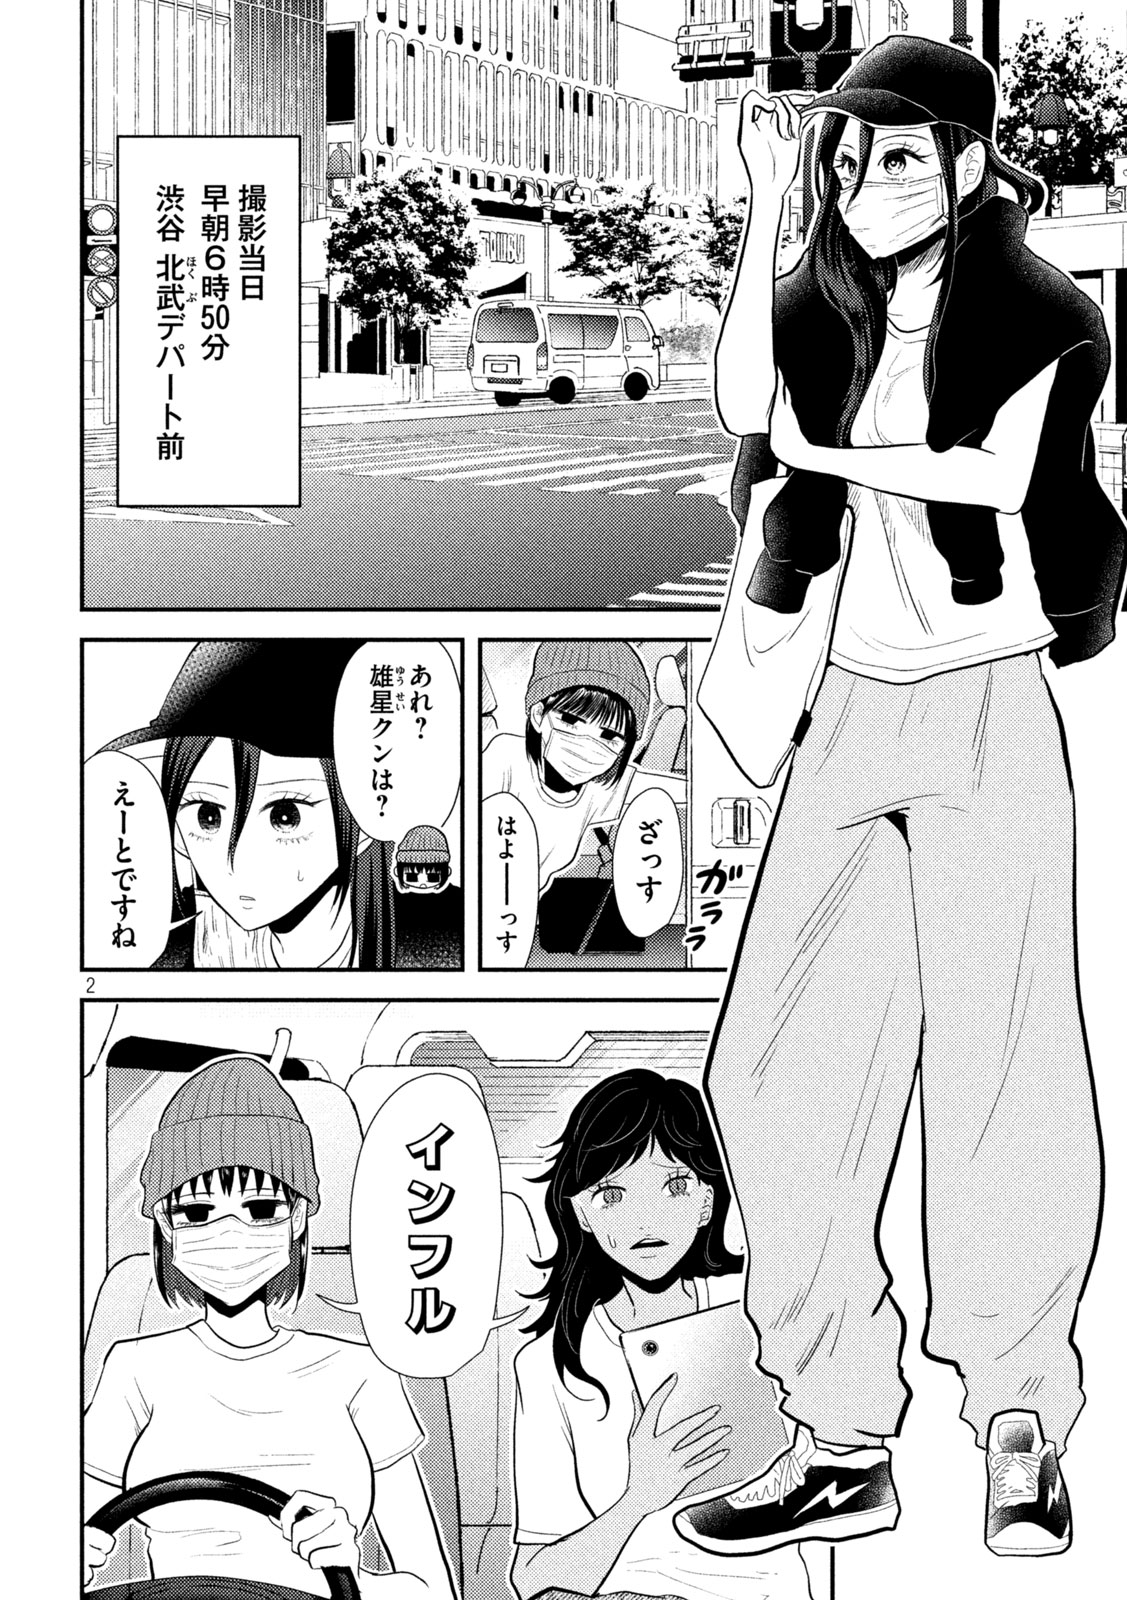 Heisei Haizanhei Sumire-chan - Chapter 10 - Page 2